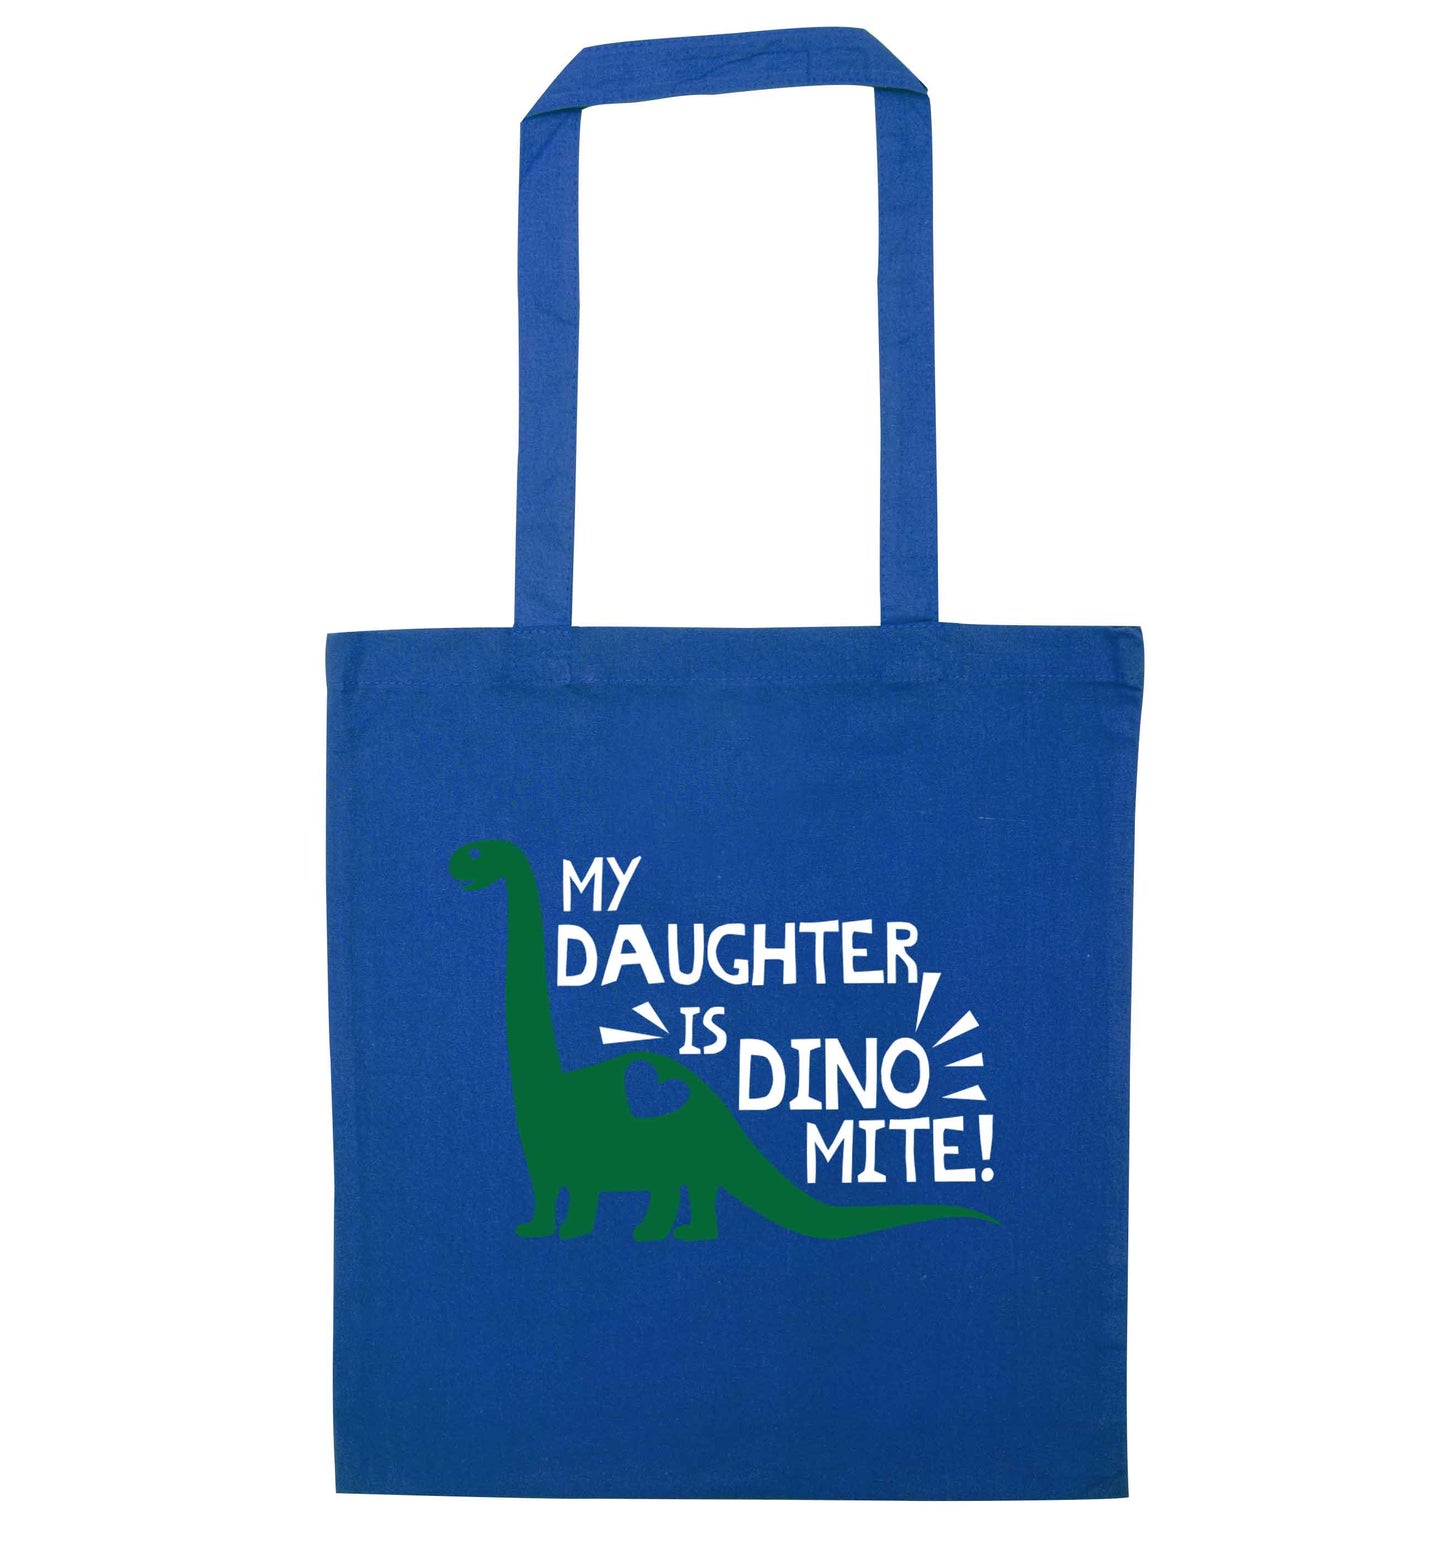 My daughter is dinomite! blue tote bag